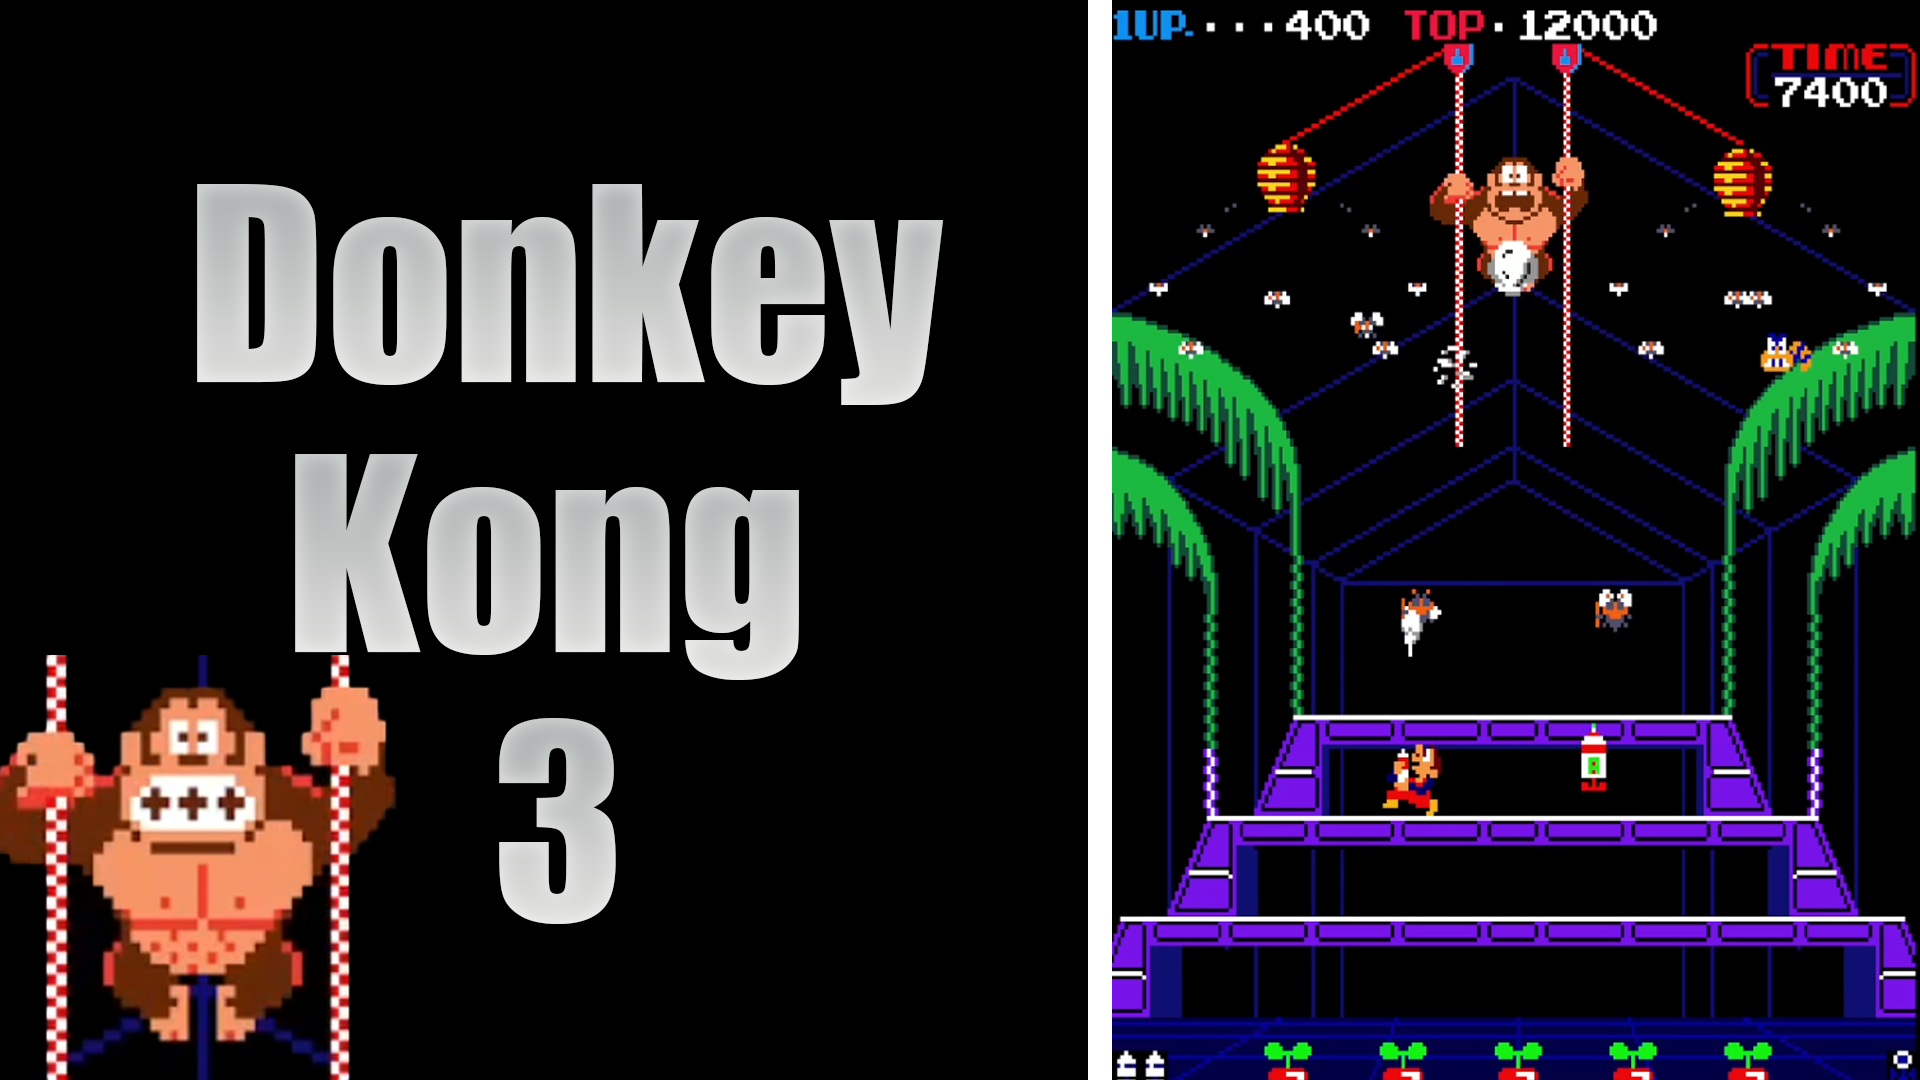 The Popeye cartoon that inspired Nintendo's Donkey Kong – Thumbsticks